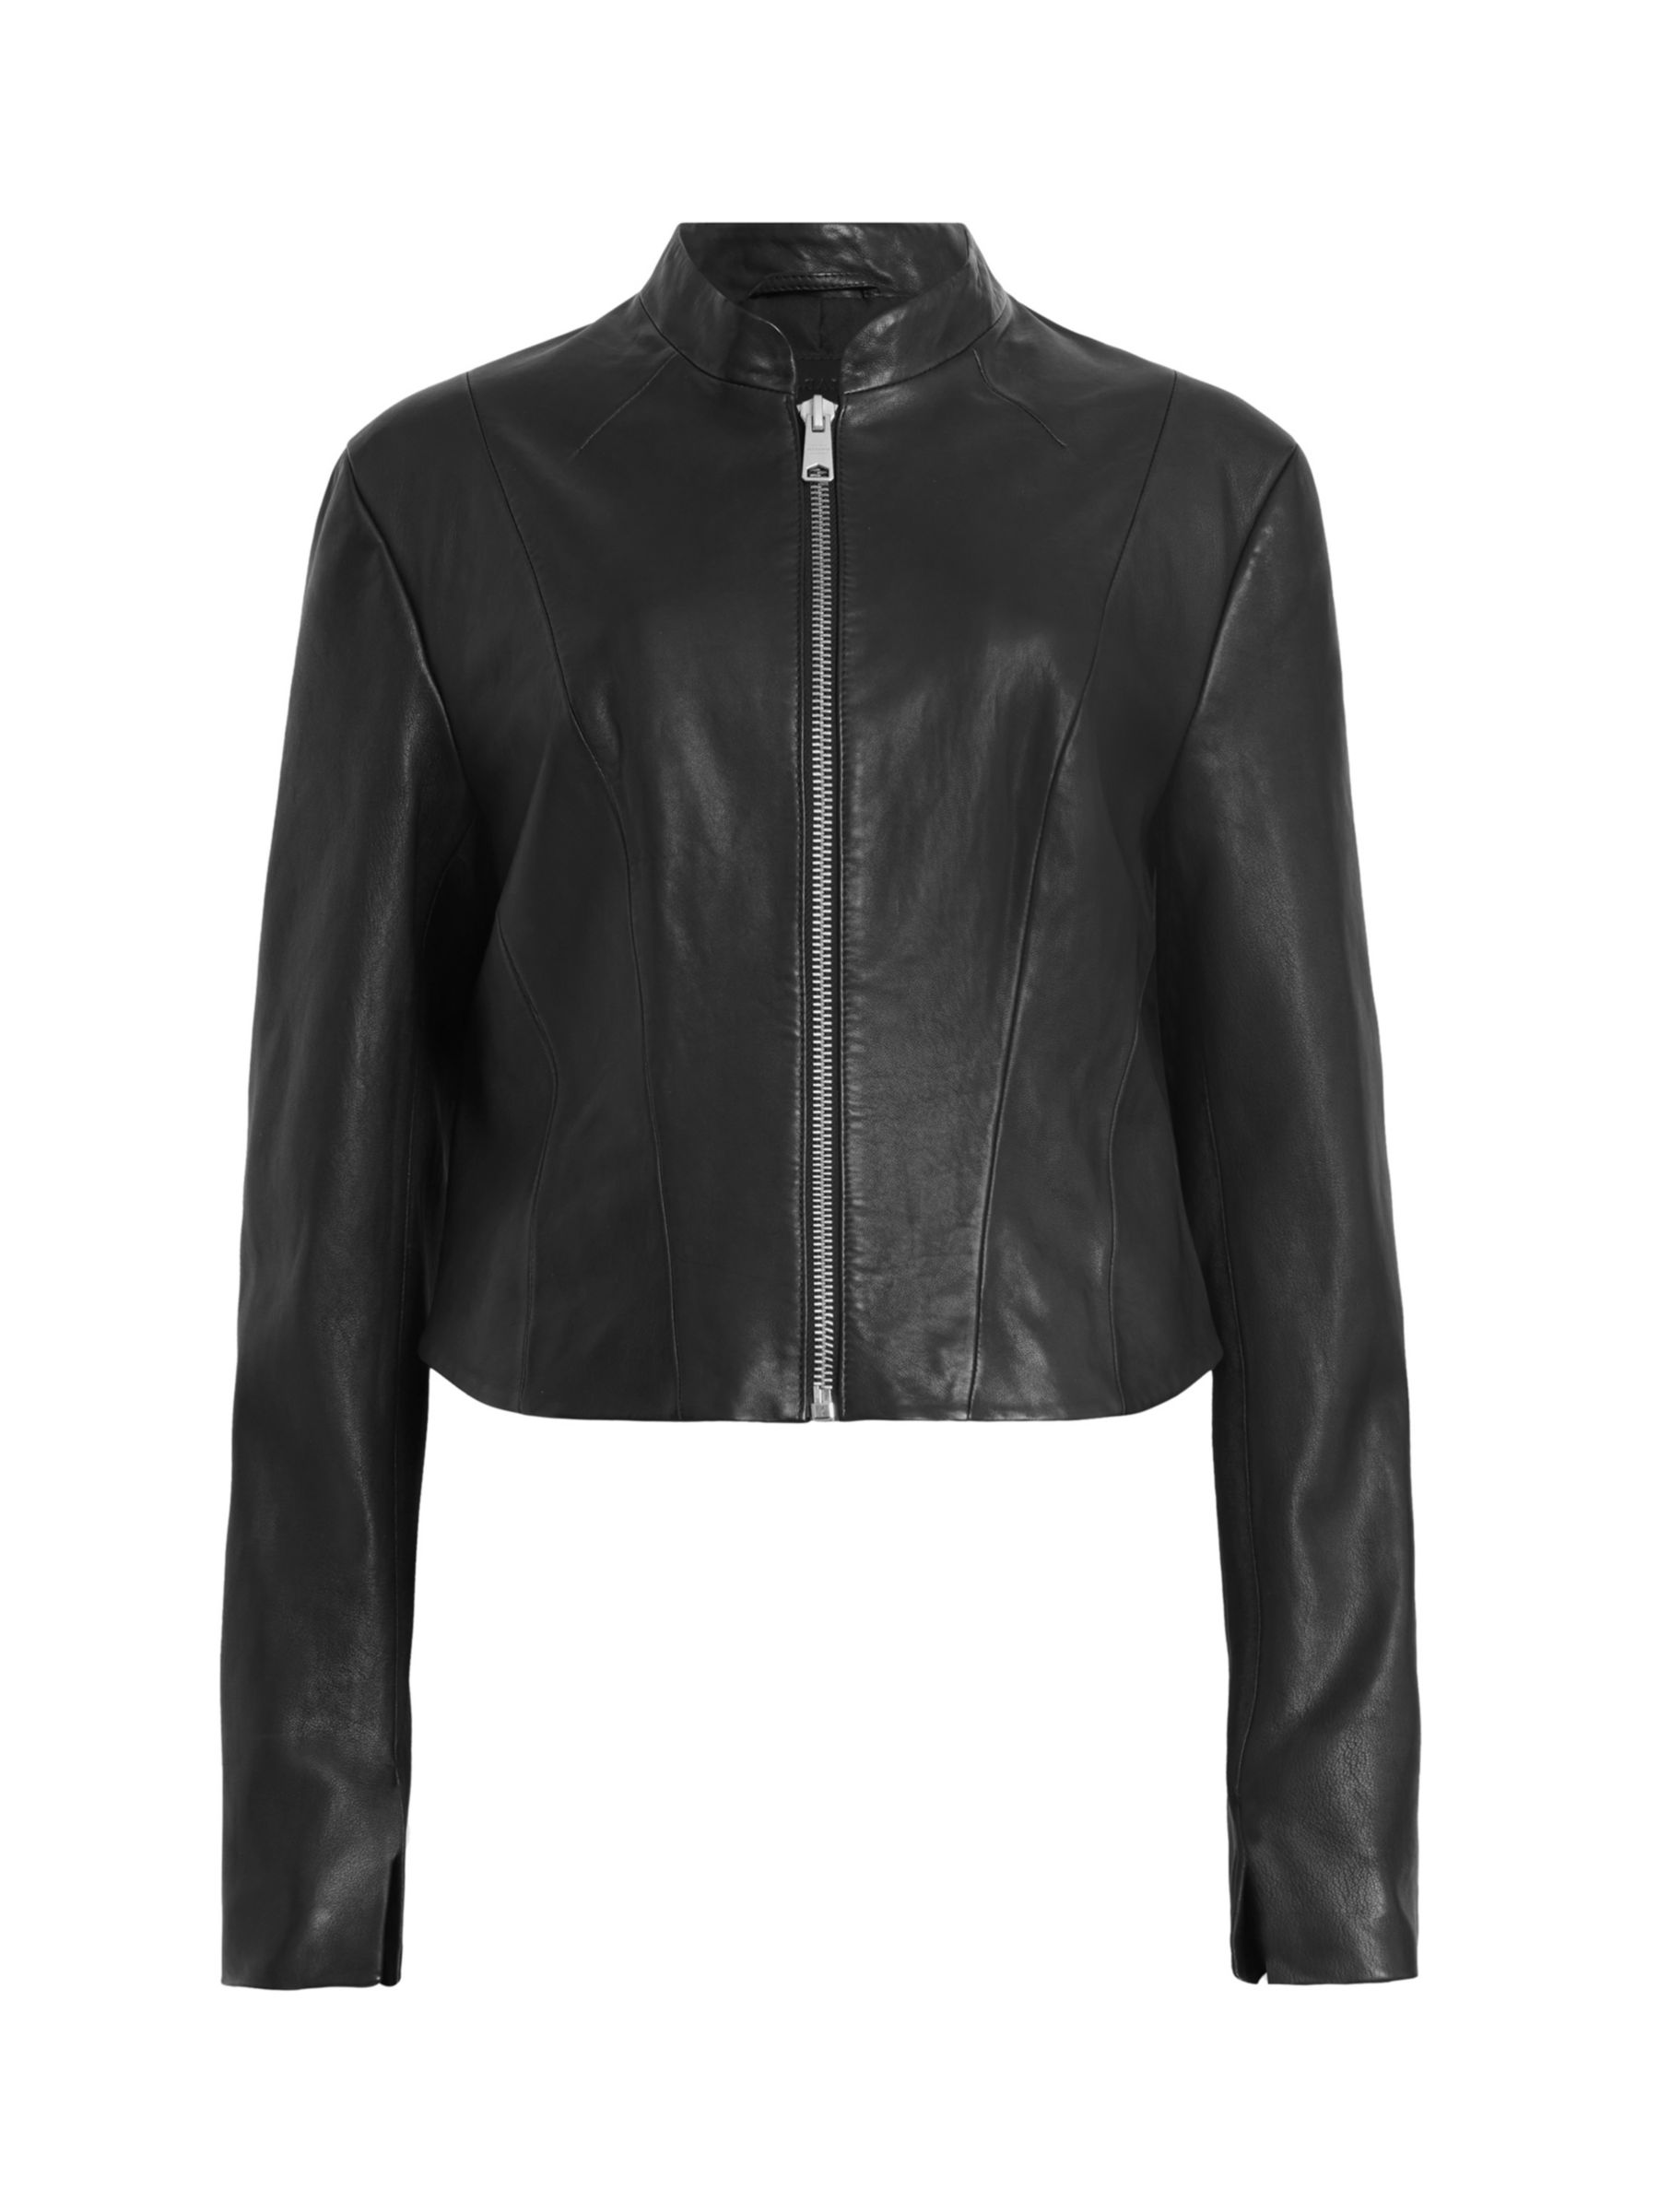 AllSaints Sadler Collarless Leather Jacket, Black at John Lewis & Partners